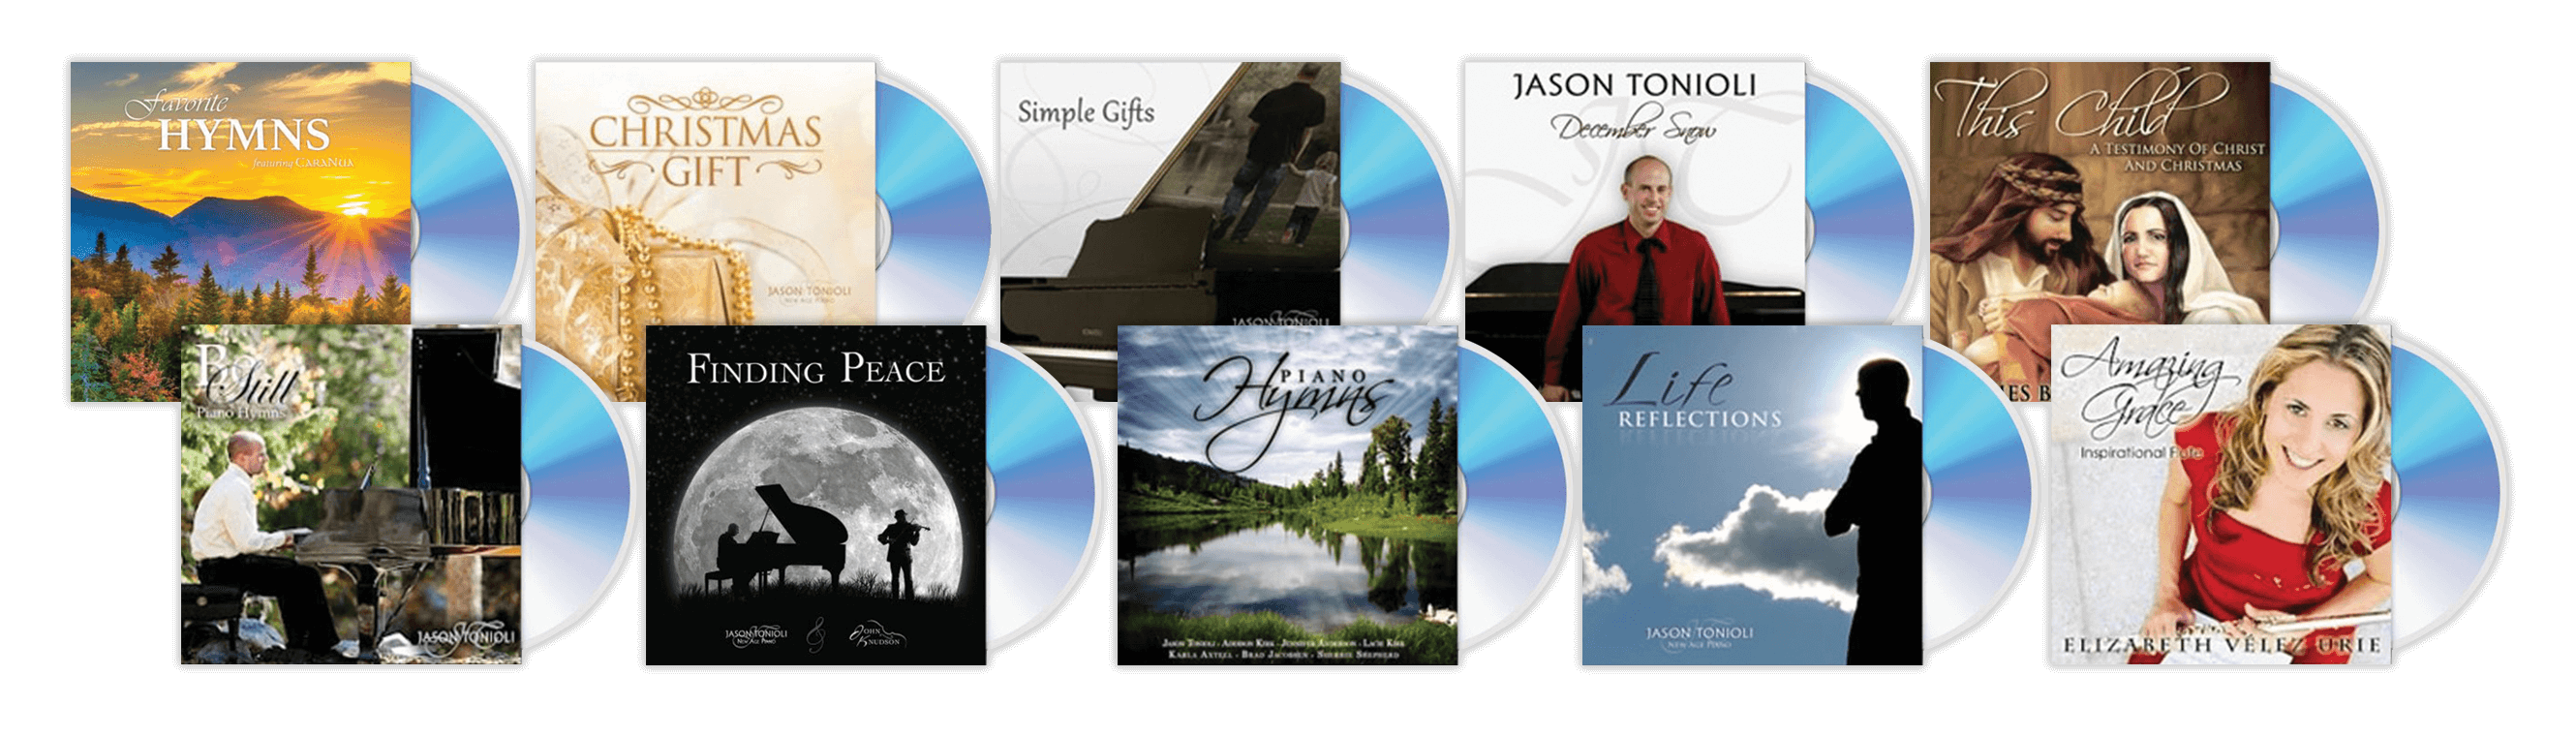 Jason CD Collage 2